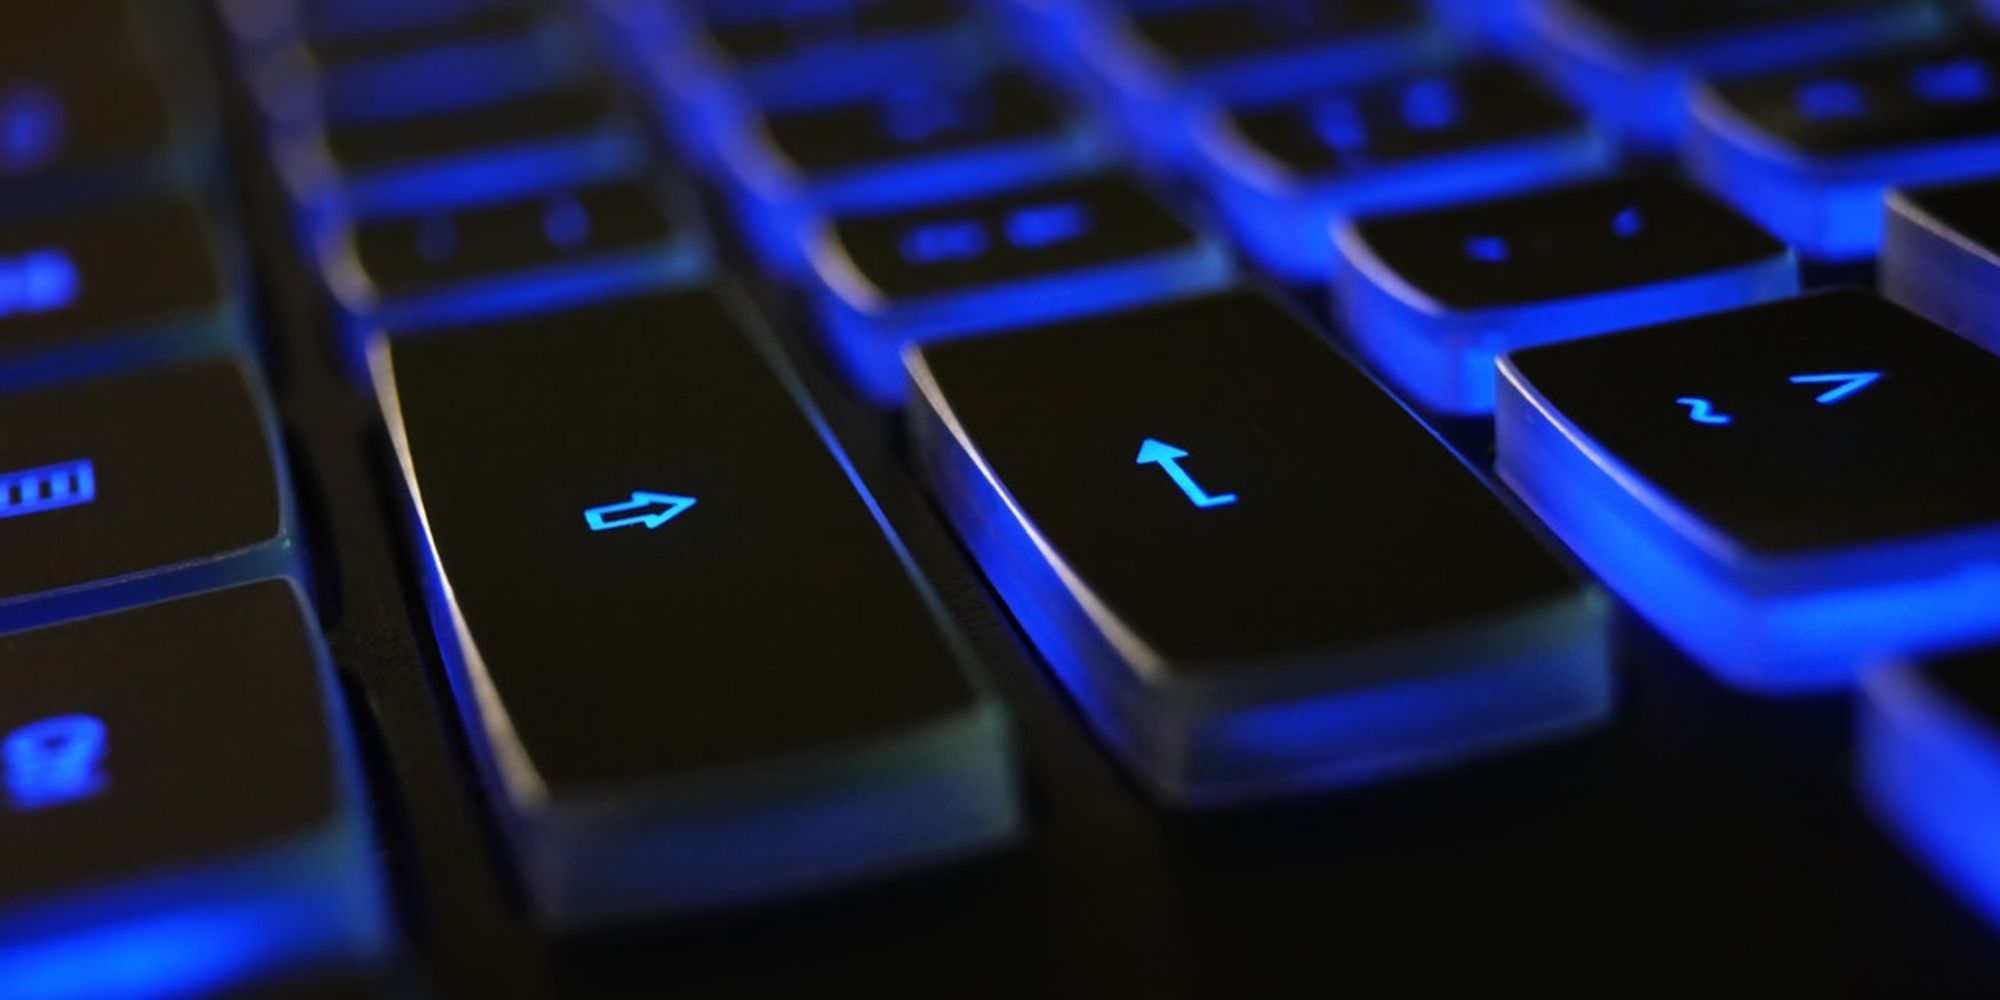 Closeup Photo Of Black And Blue Keyboard 1194713